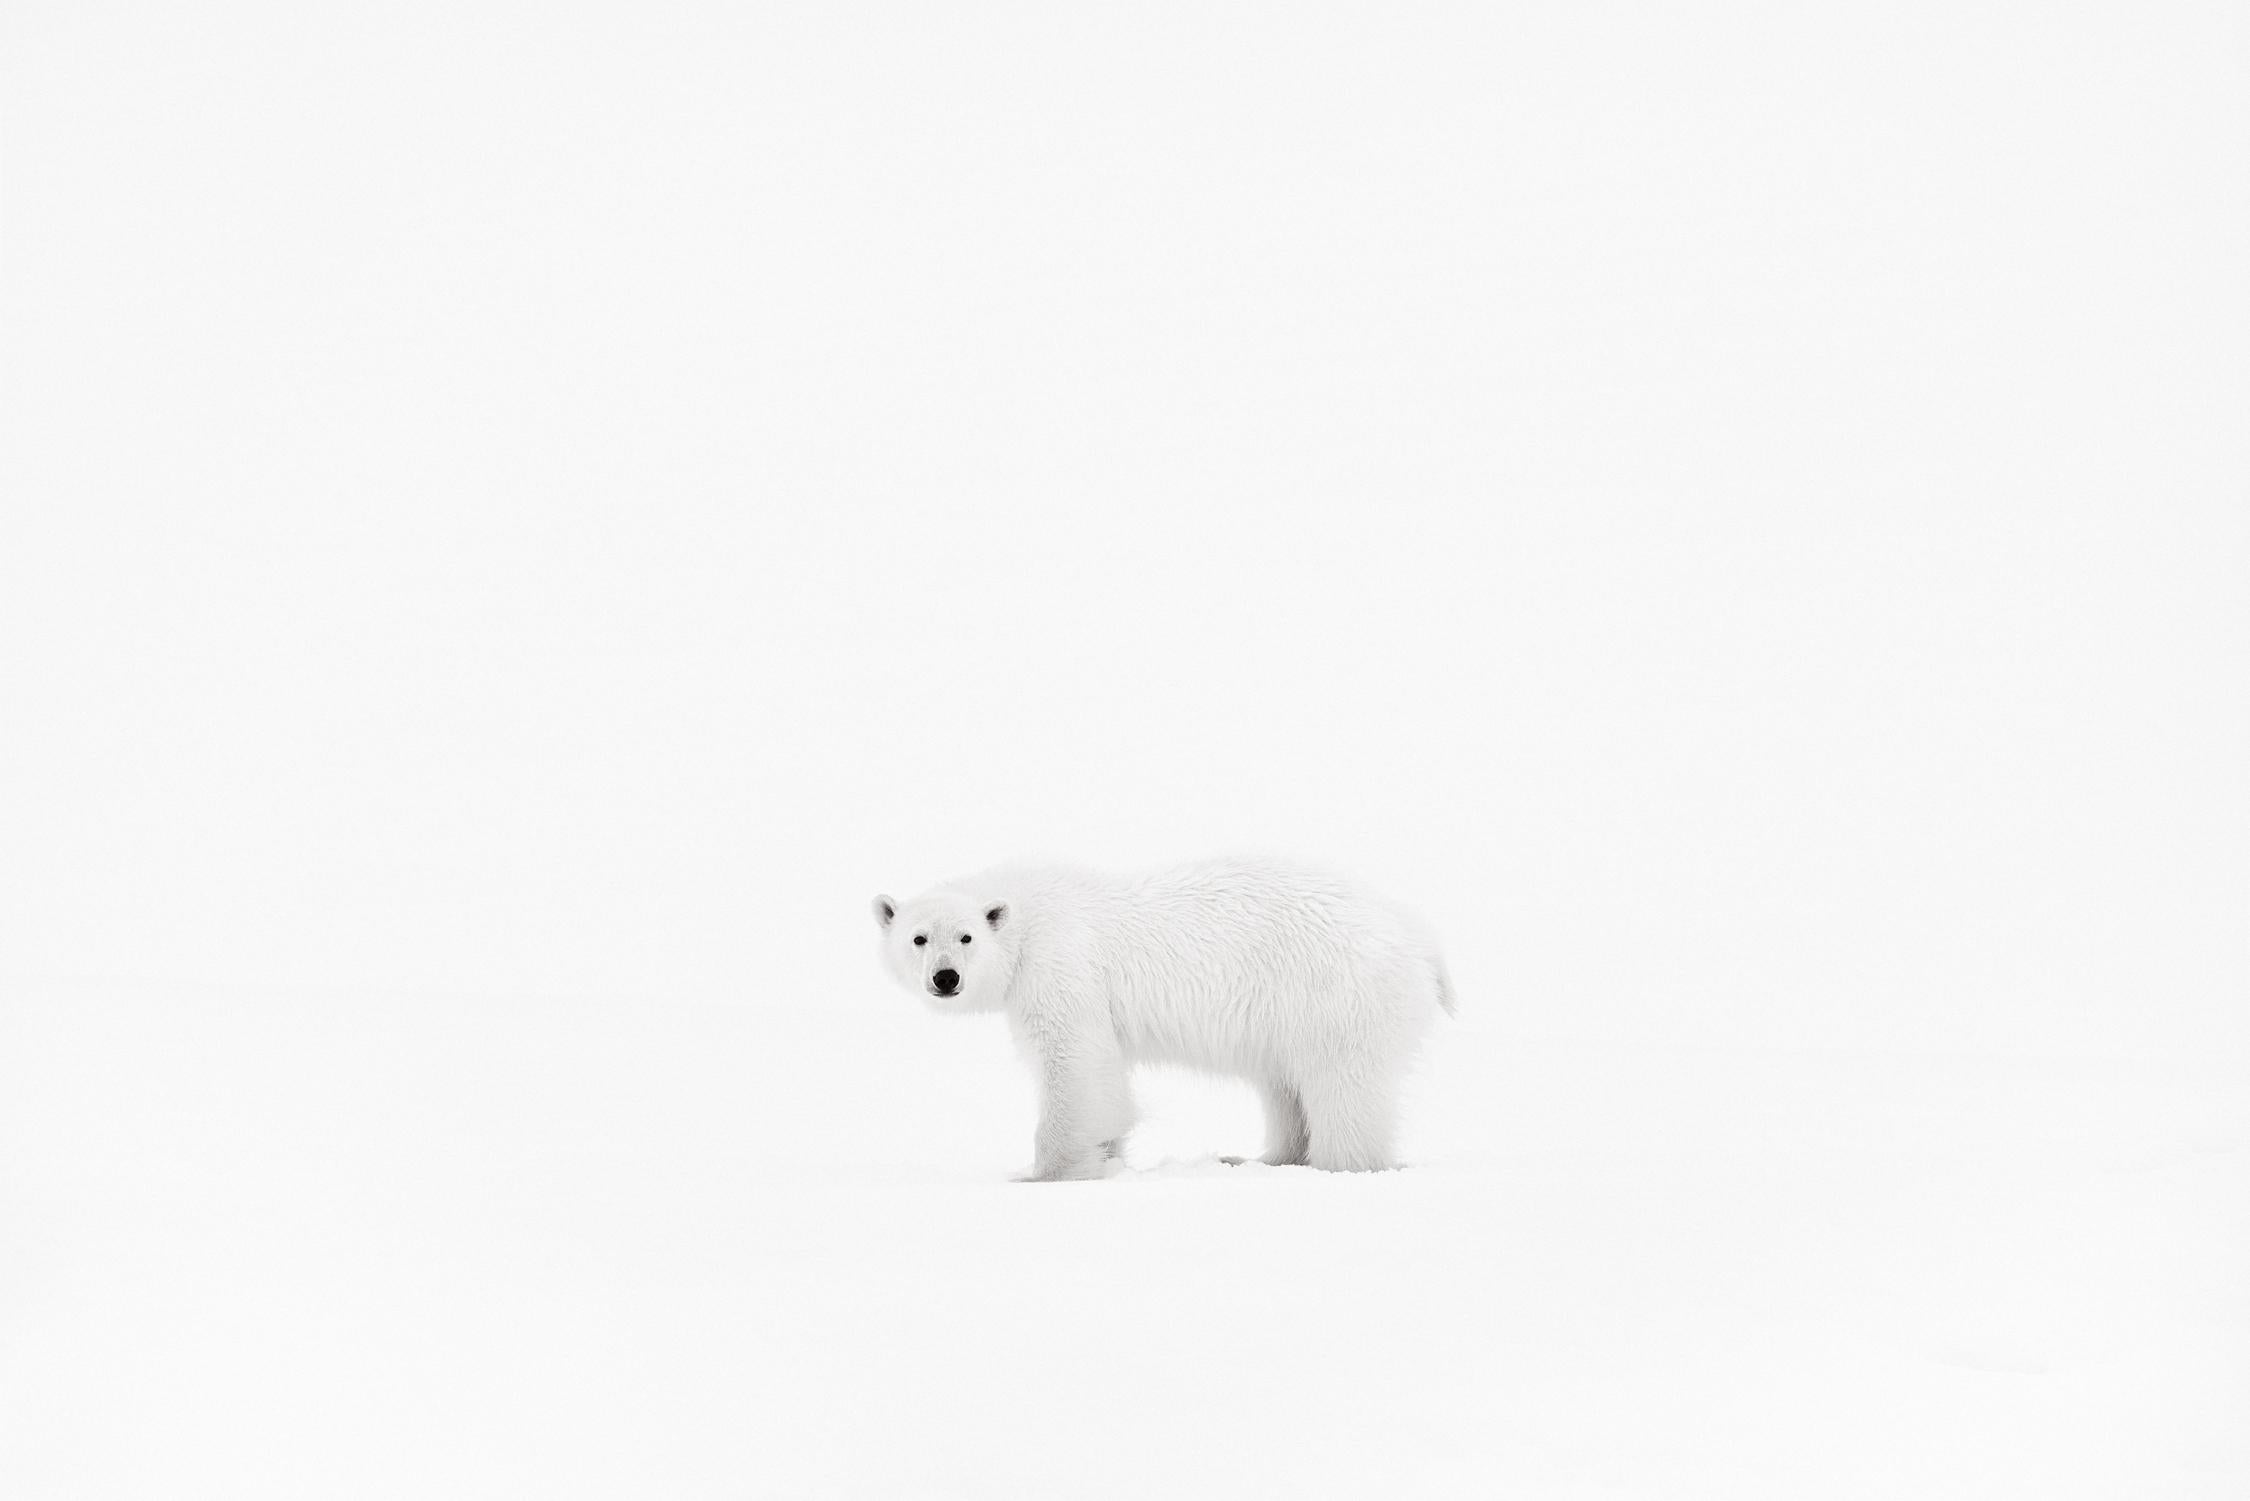 Drew Doggett Black and White Photograph - Polar Bear with Minimal Backdrop, Wildlife, Black & White Photography